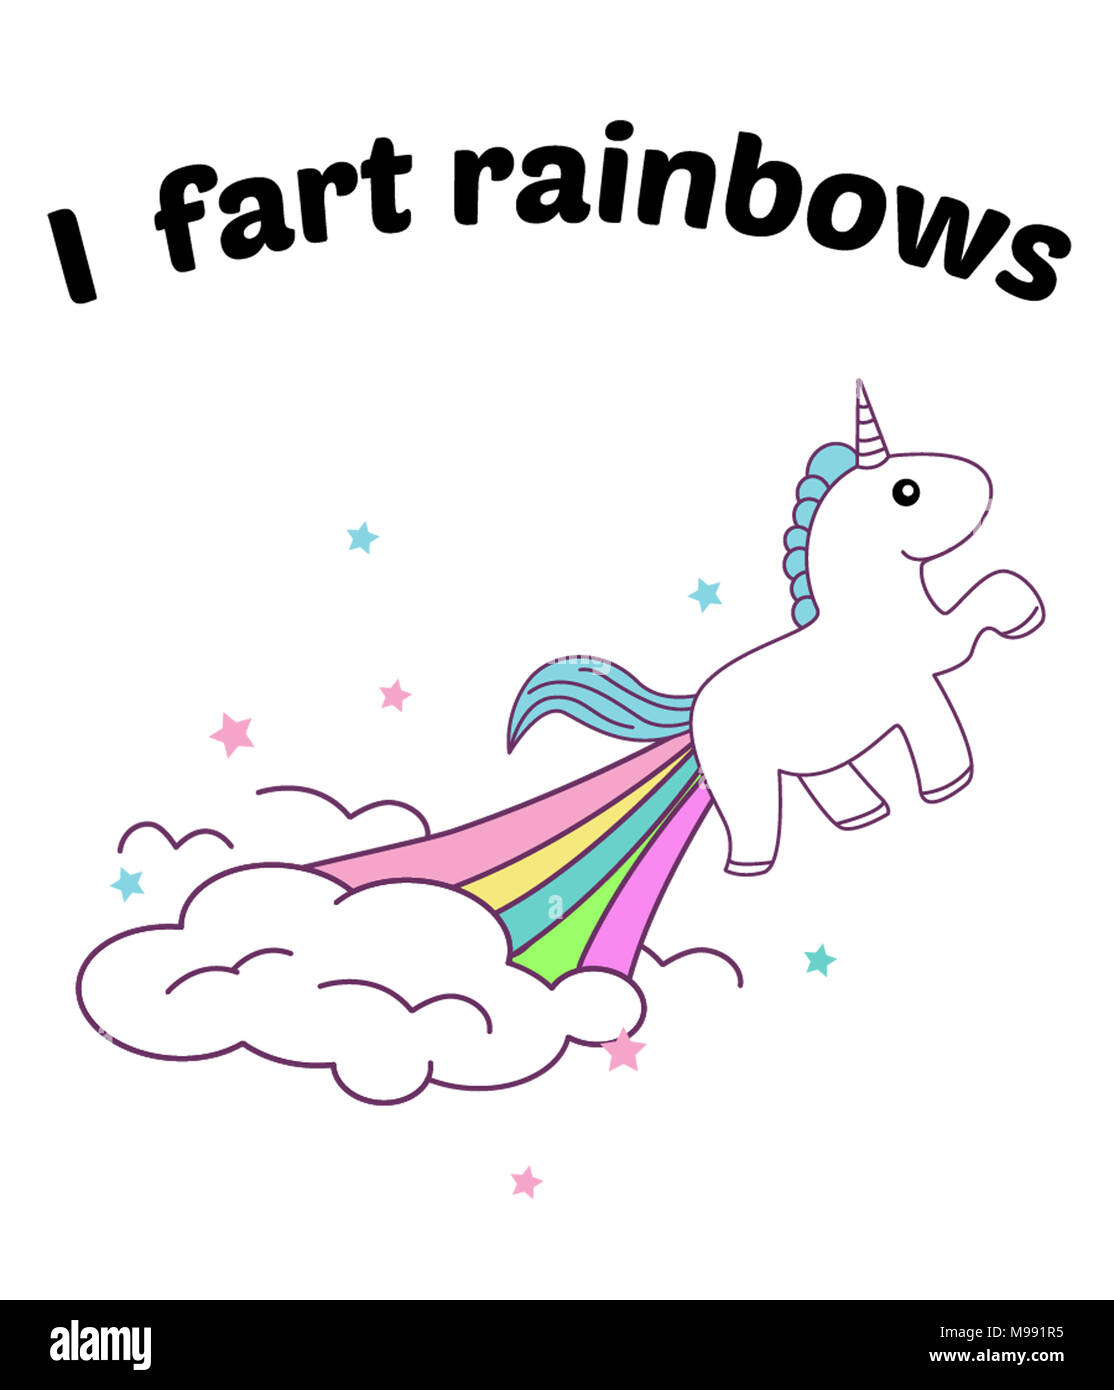 I fart rainbows, fart, rainbows, colorful, unicorn, unicorn art, unicorn with rainbow, unicorn rainbow,    statement, humor, funny humor, humor quotes Stock Photo